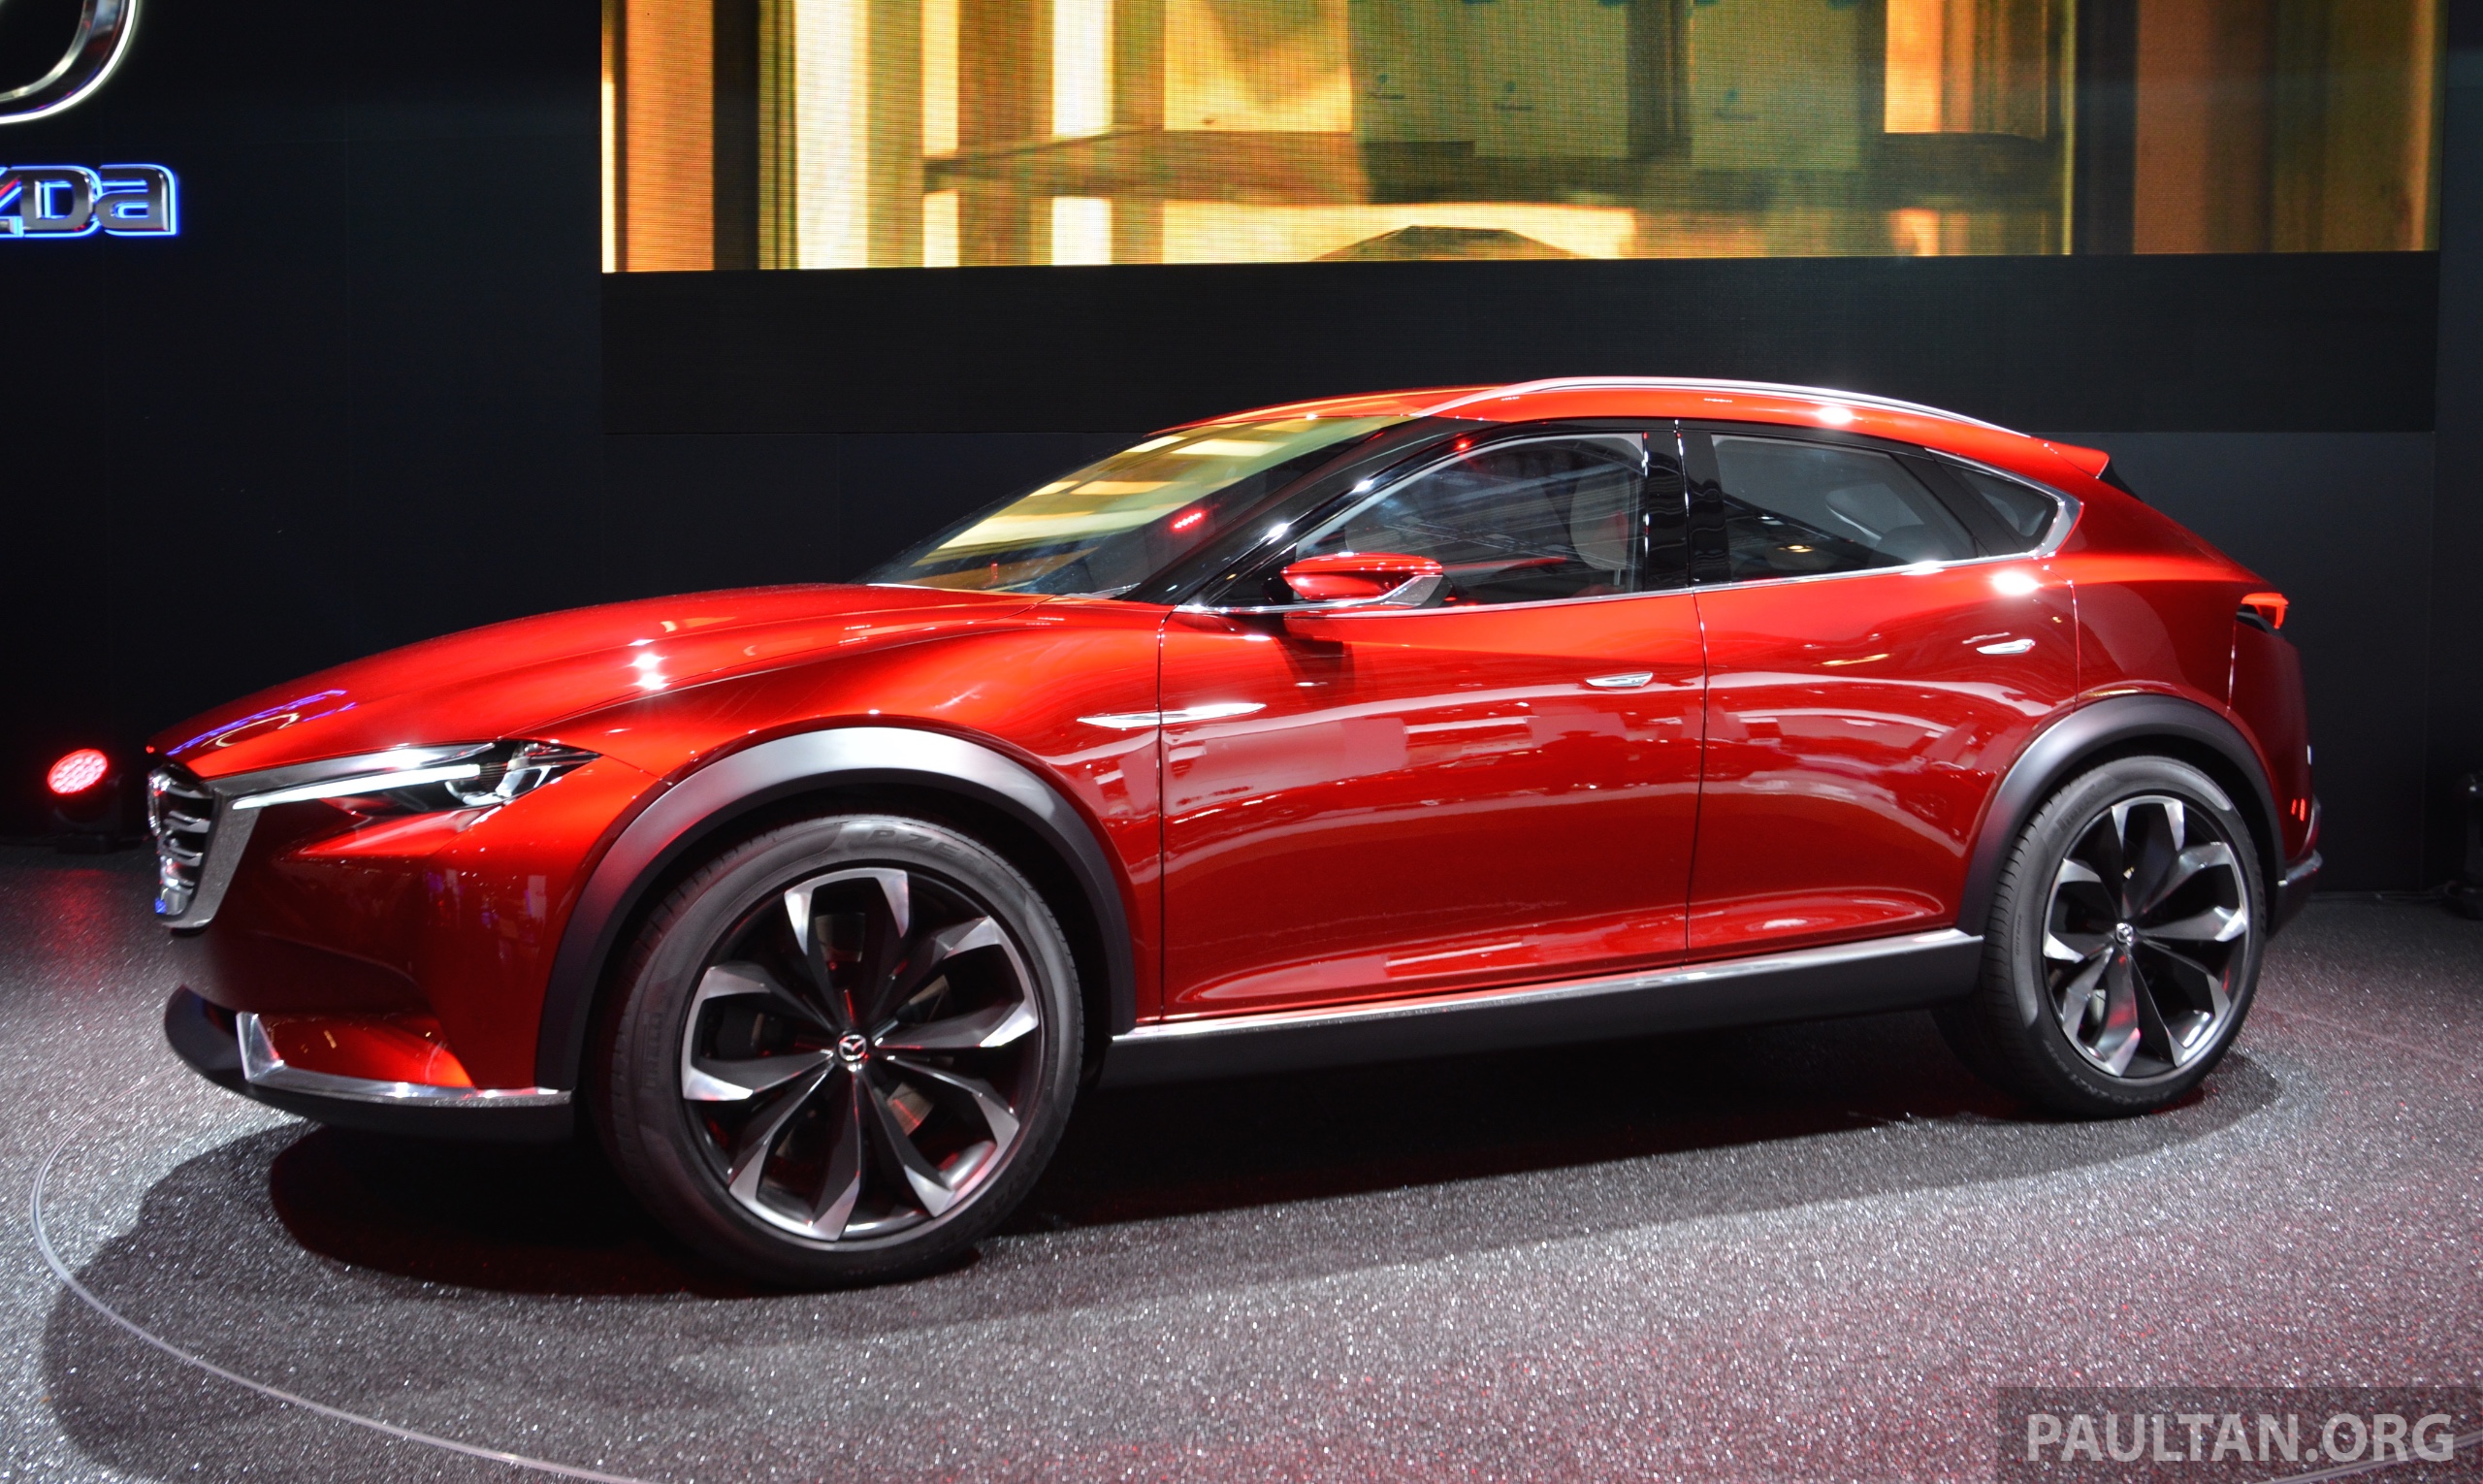 Mazda Koeru concept previews a sportier CX-5 SUV? Image 380221